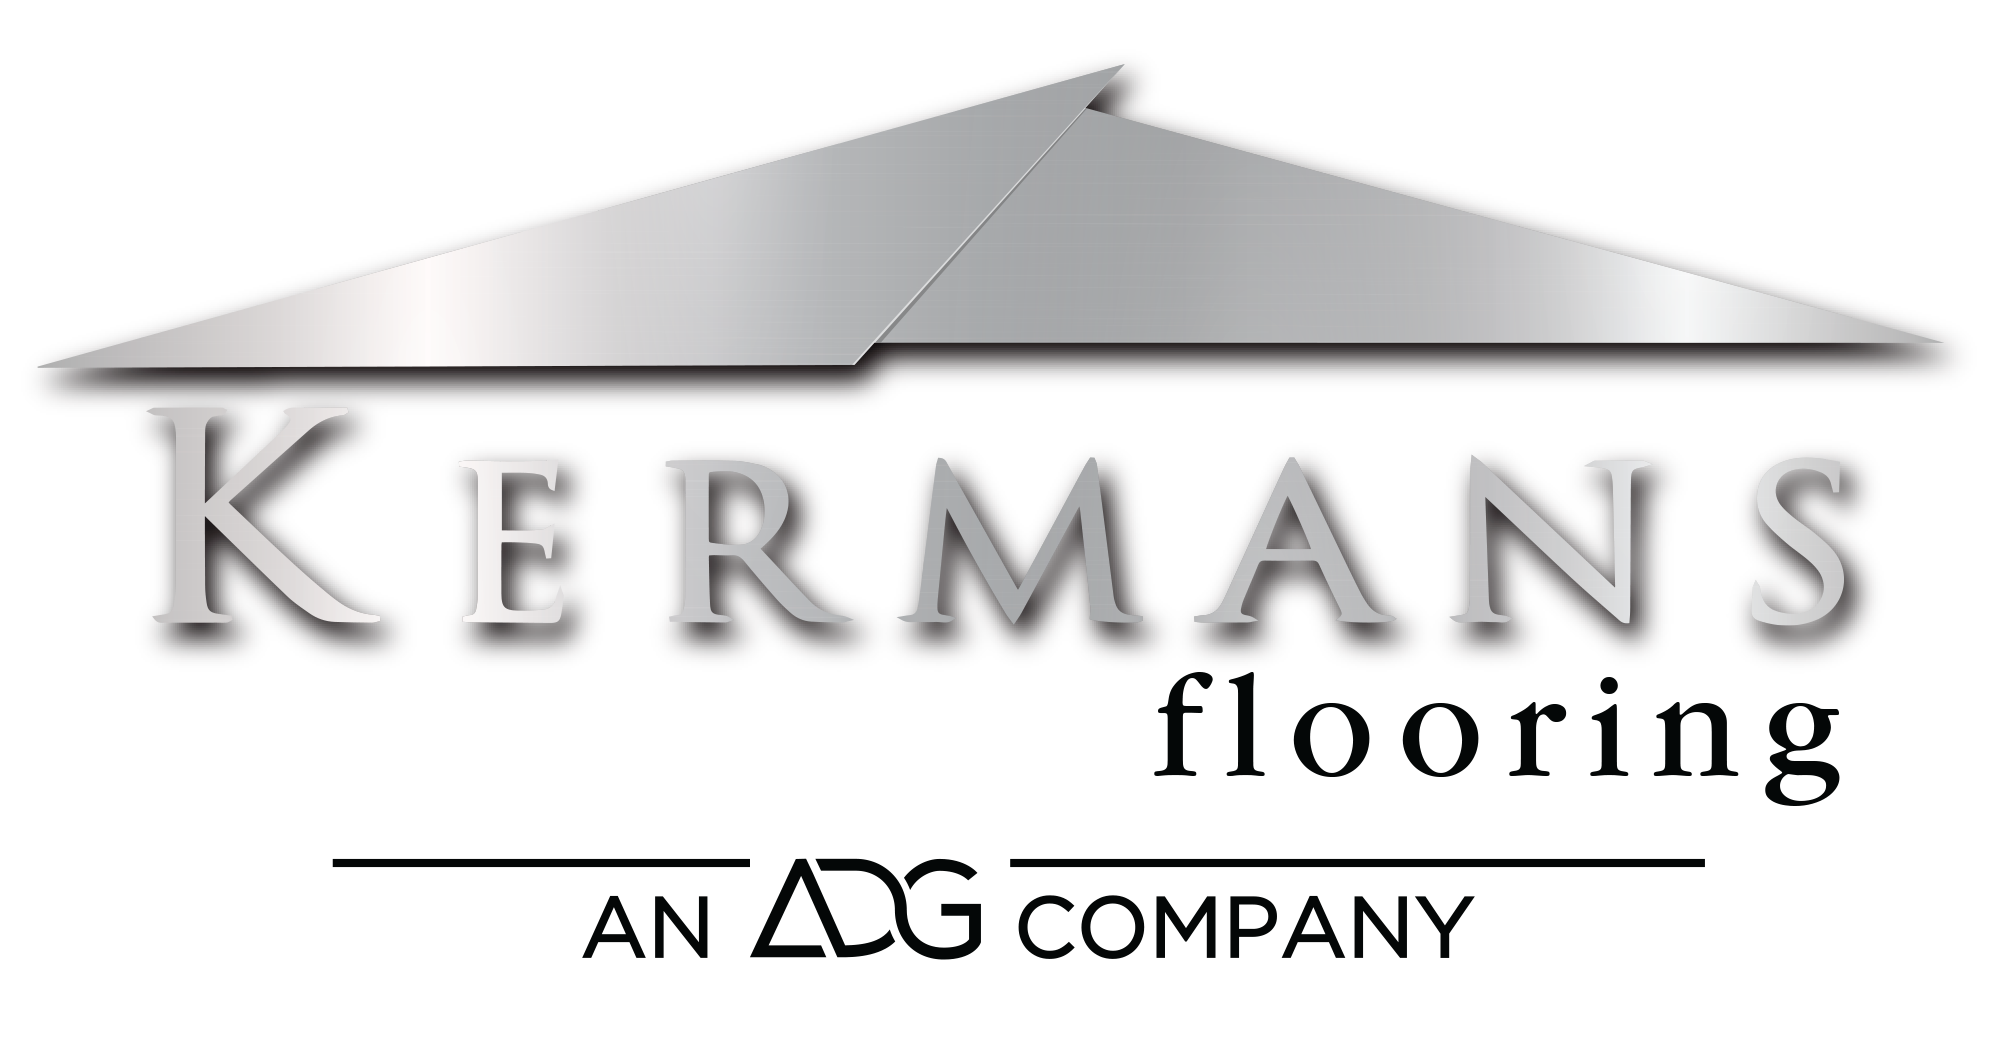 Kermans Flooring Llc Job Opportunities